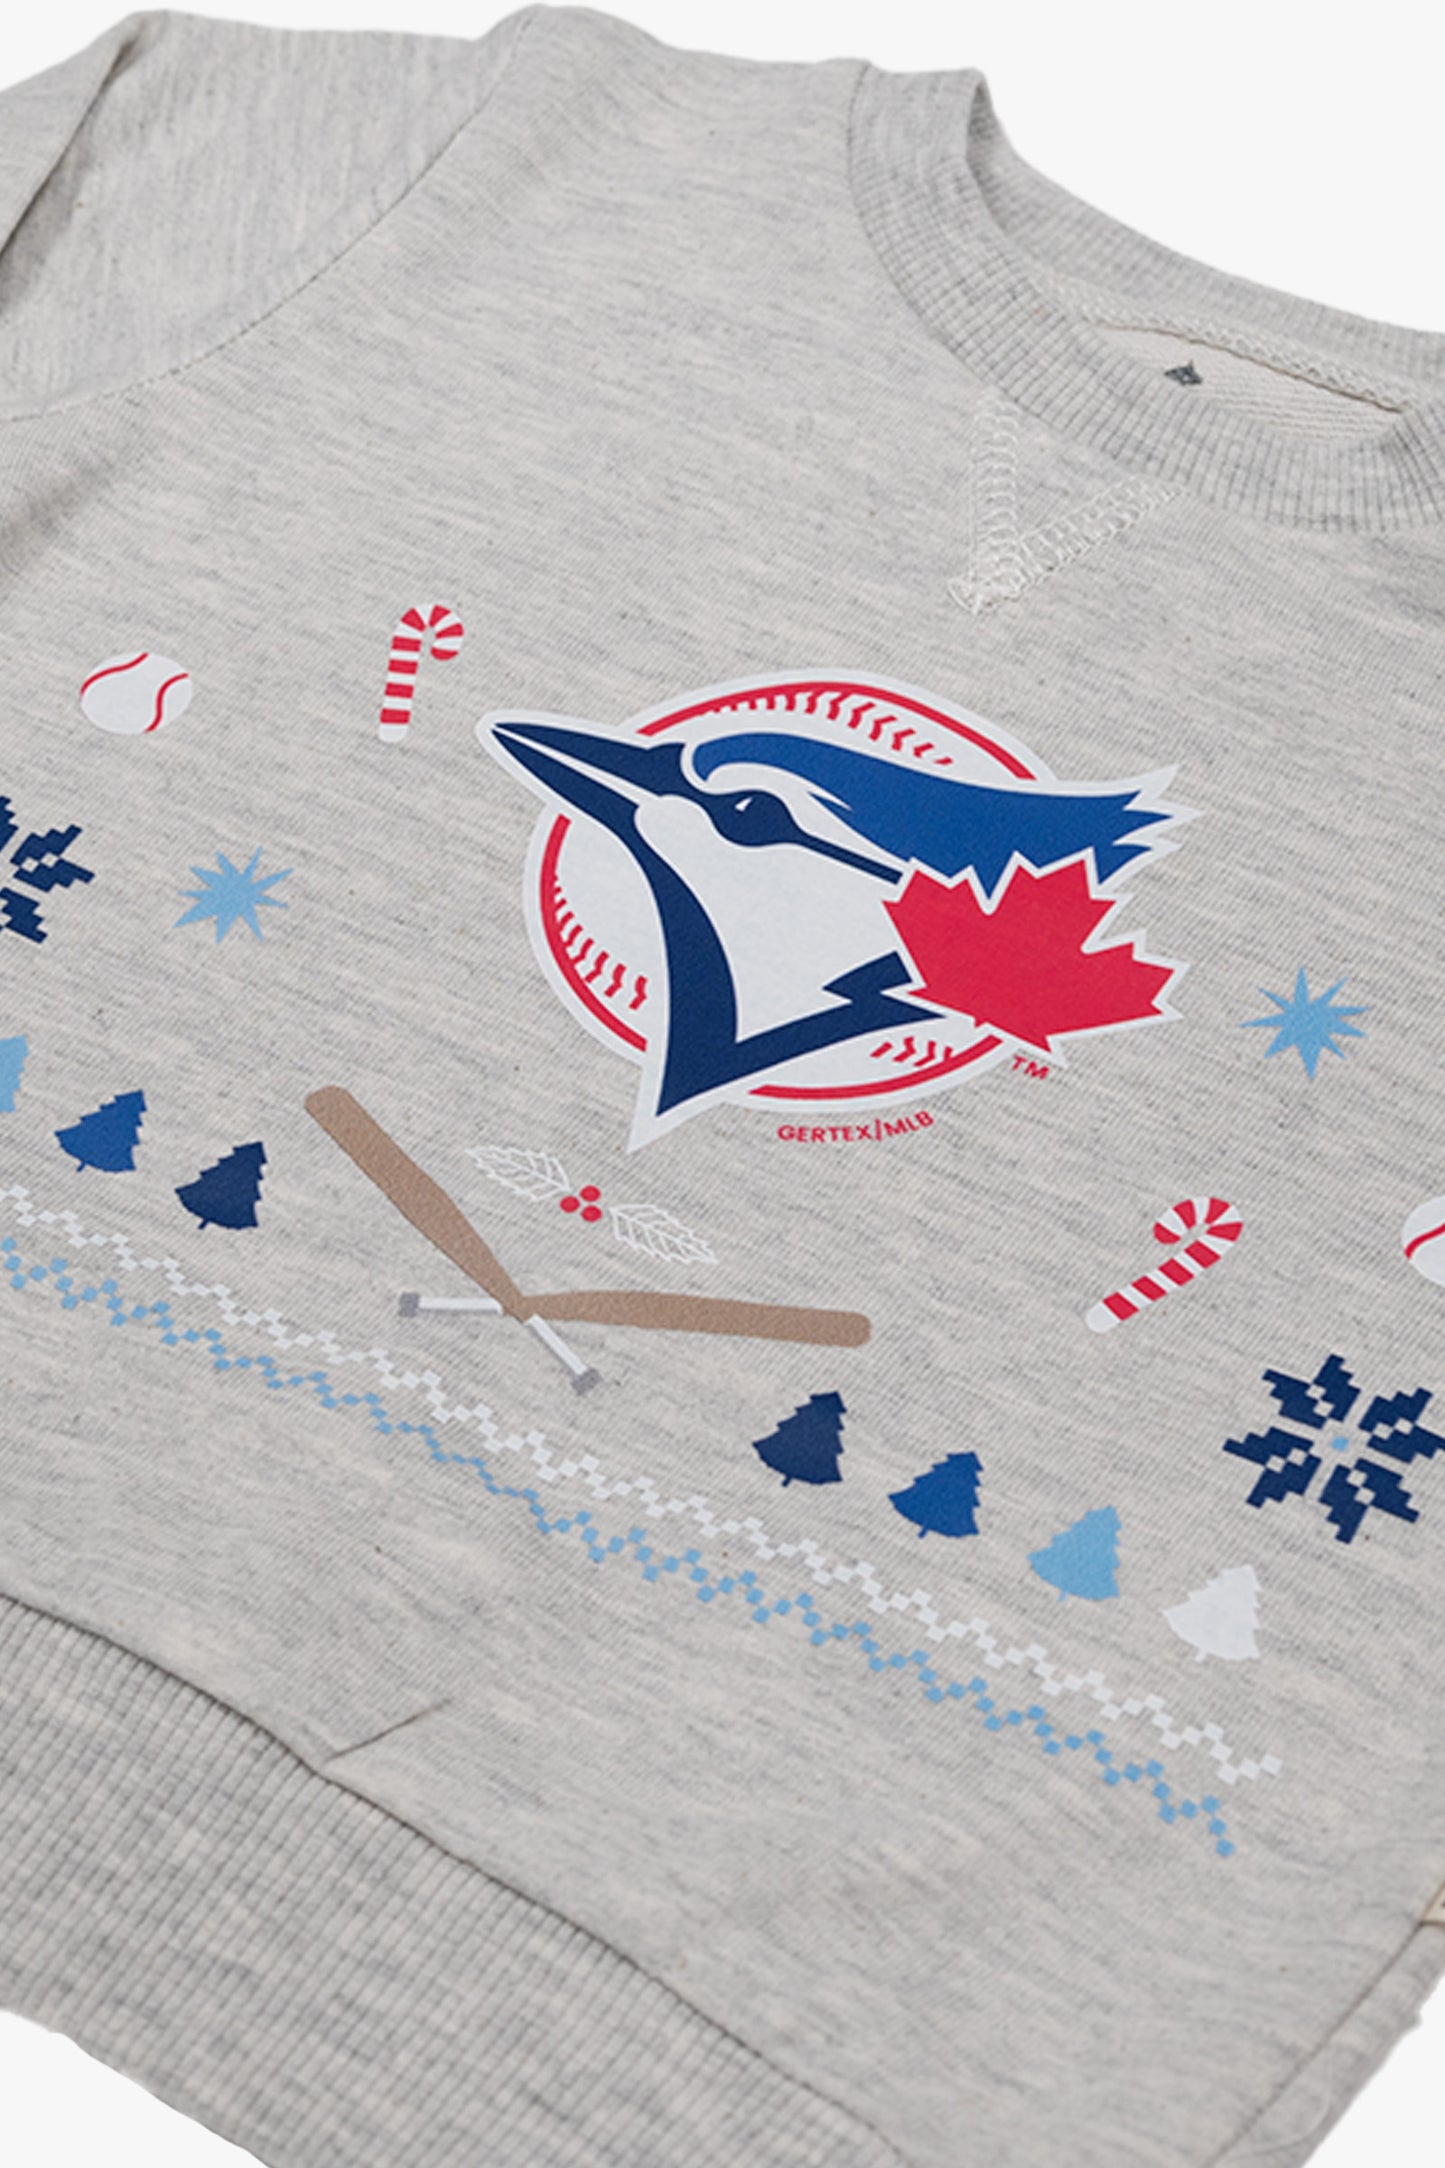 Toronto Blue Jays Ugly Christmas Holiday Sweater